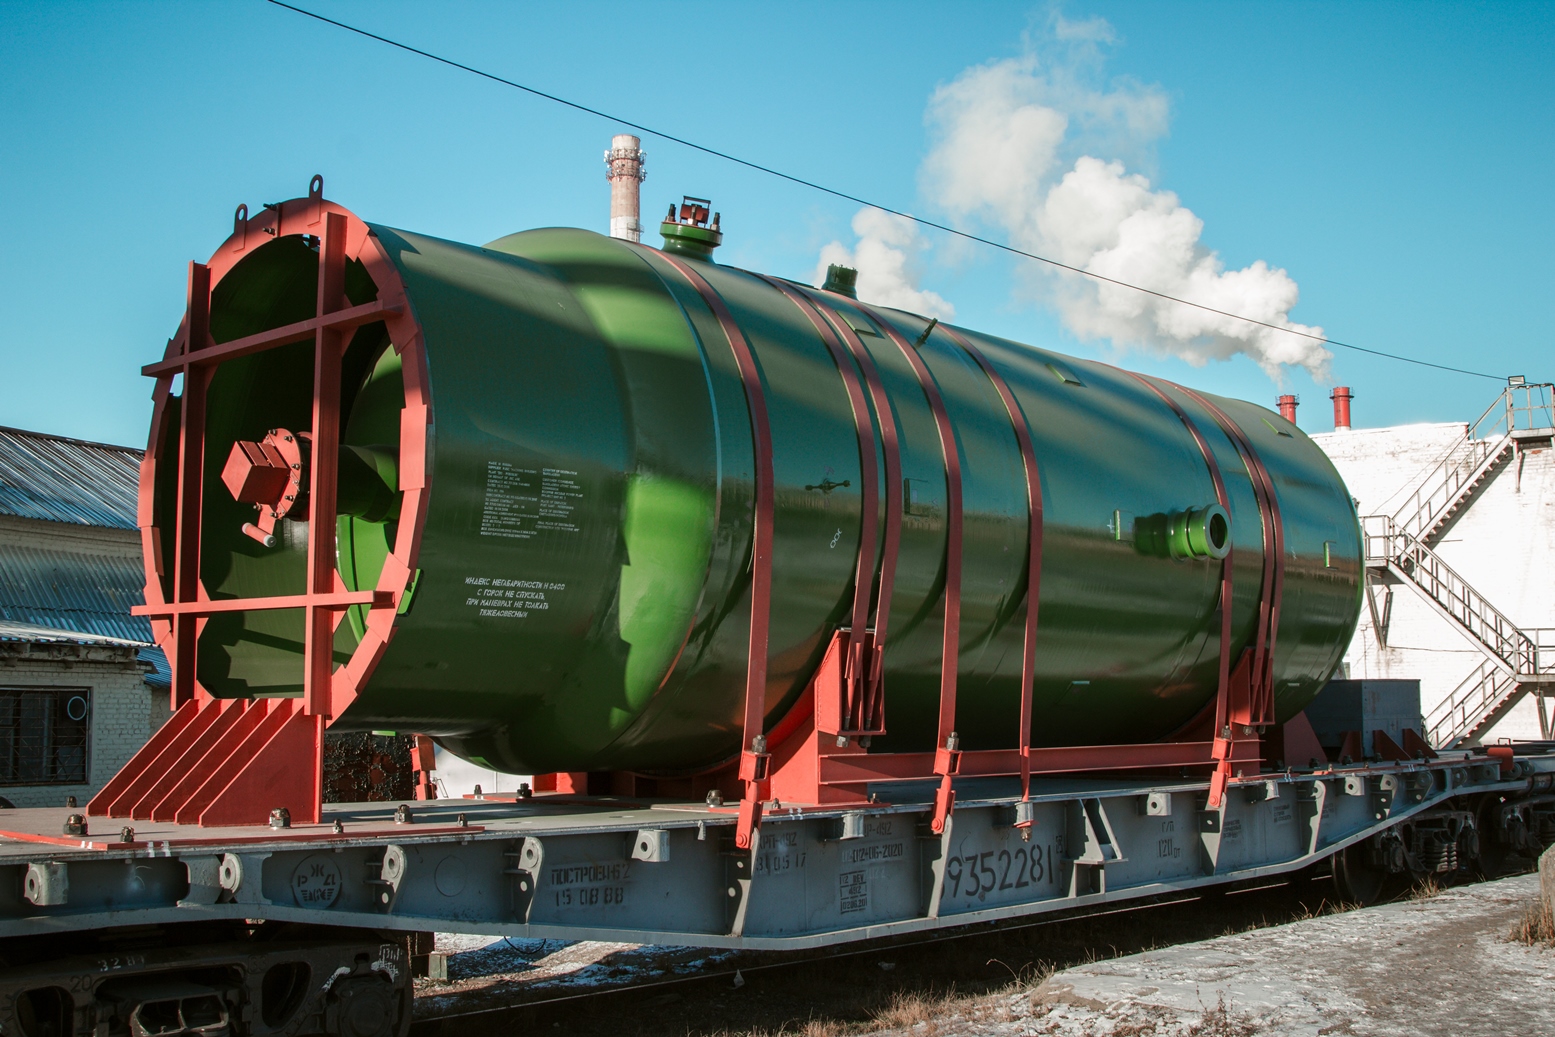 ZIO-Podolsk has shipped the ECCS Tanks for Roopur NPP